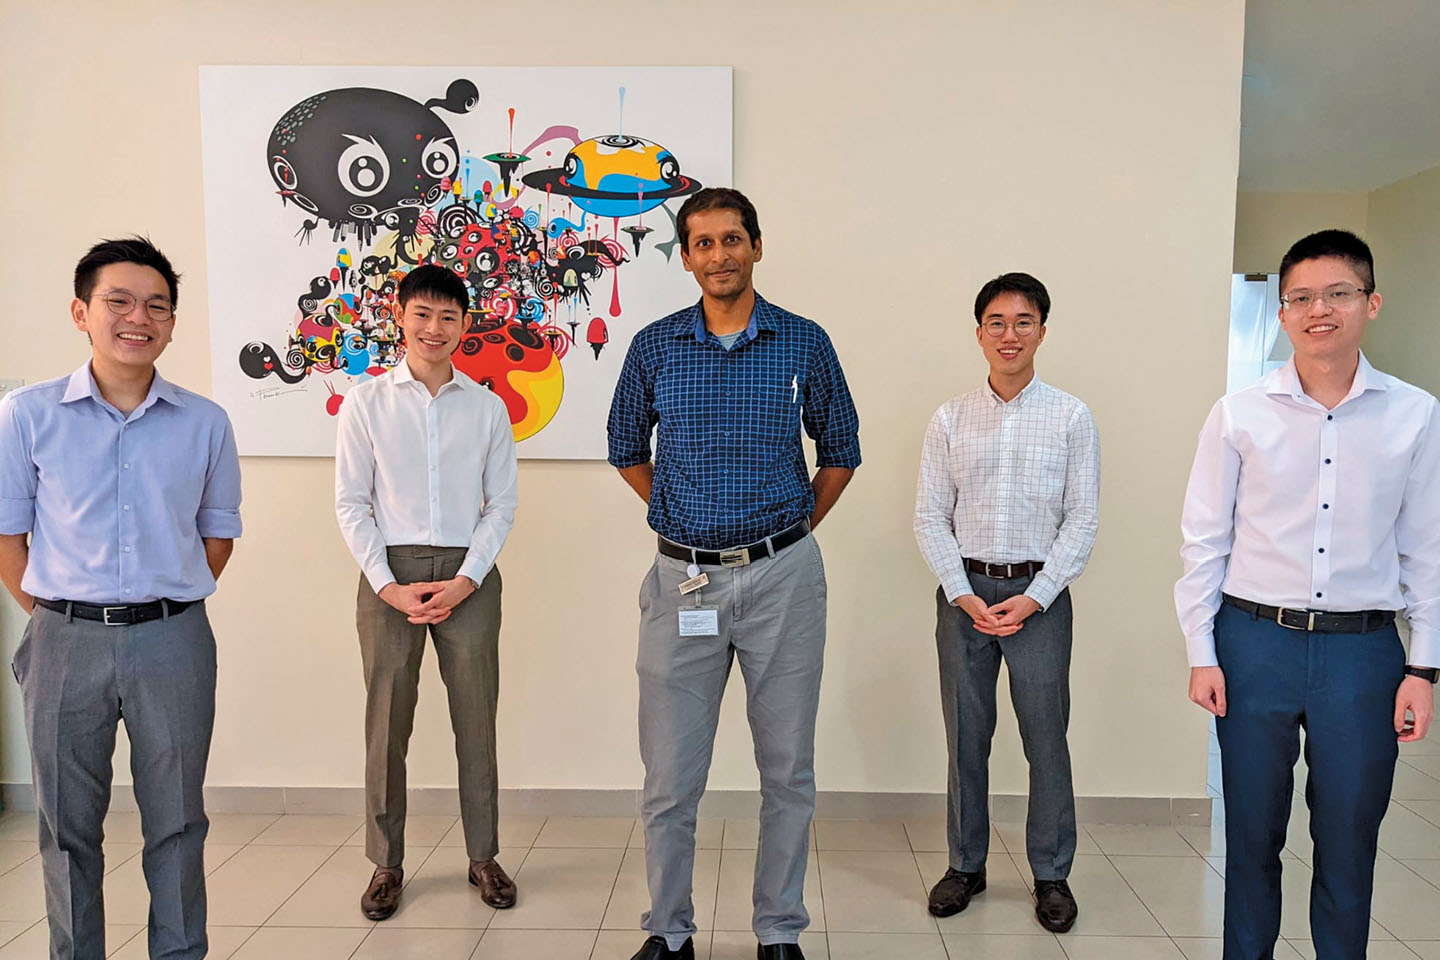 Dominic Yap, Joseph Zhao, Asst Prof Raghav Sundar, Benjamin Tan and Teo Chong Boon.